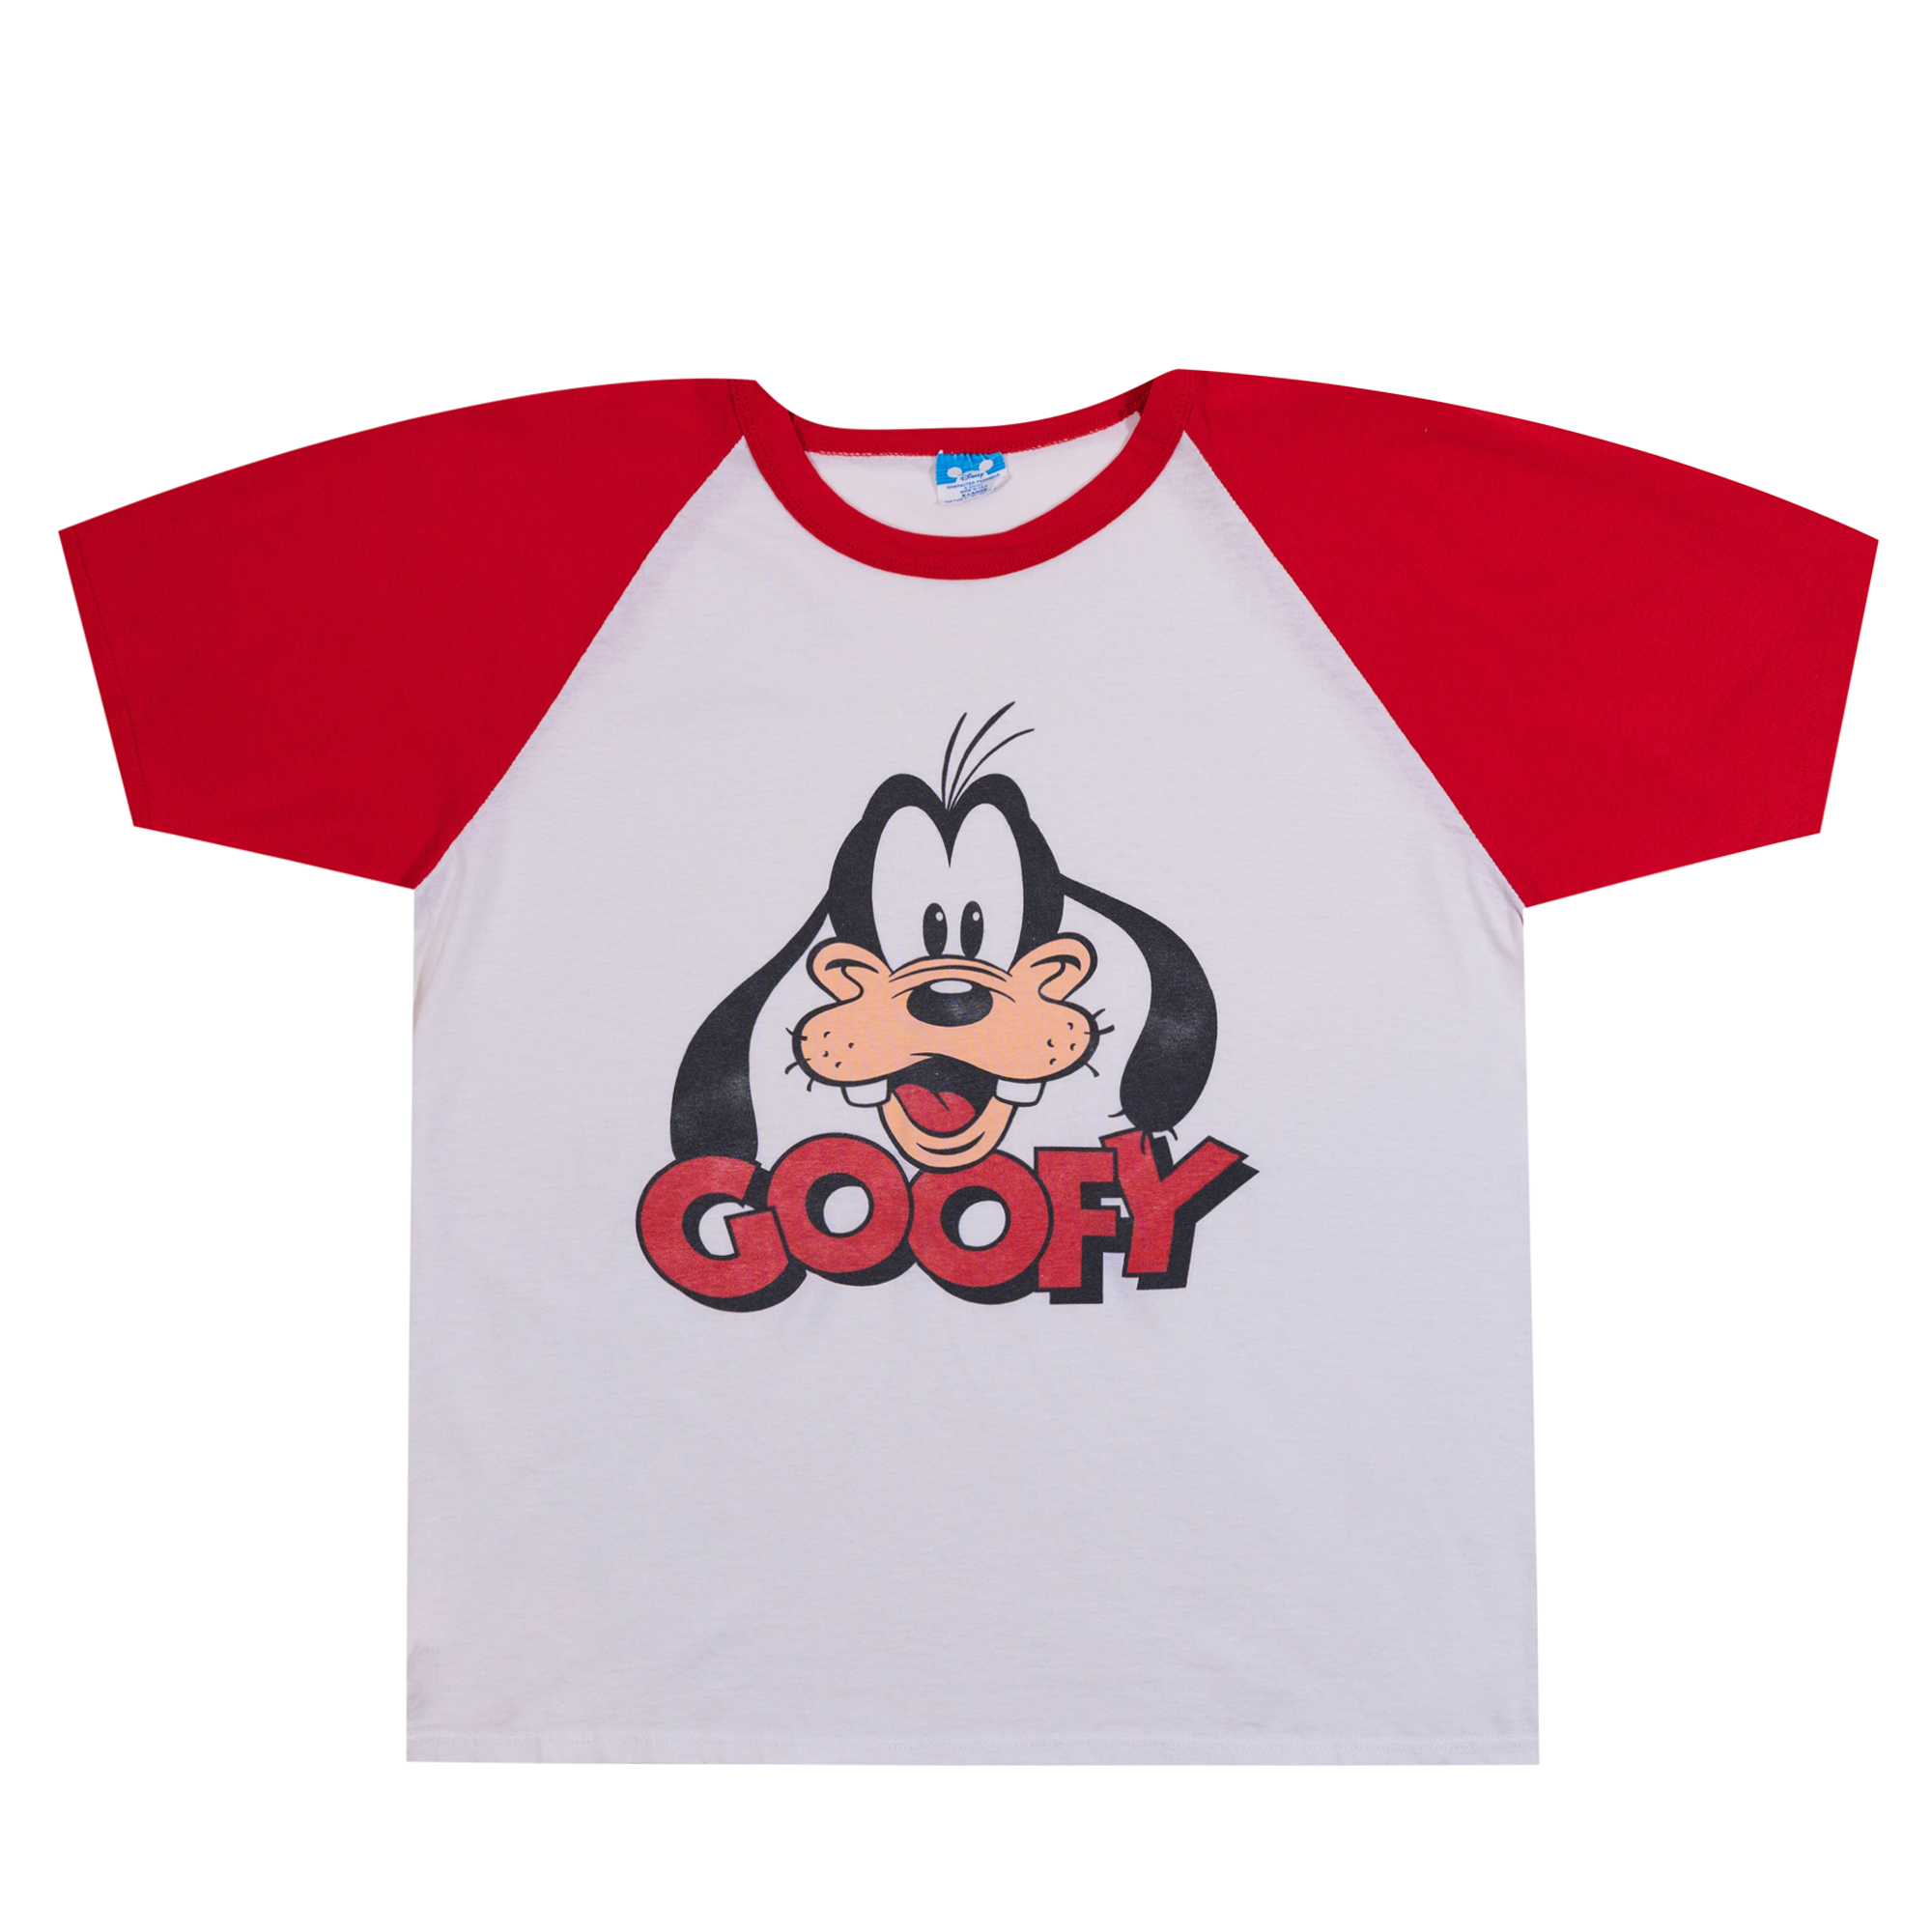 Disney Character Fashions "Goofy" Raglan Tee White-PLUS